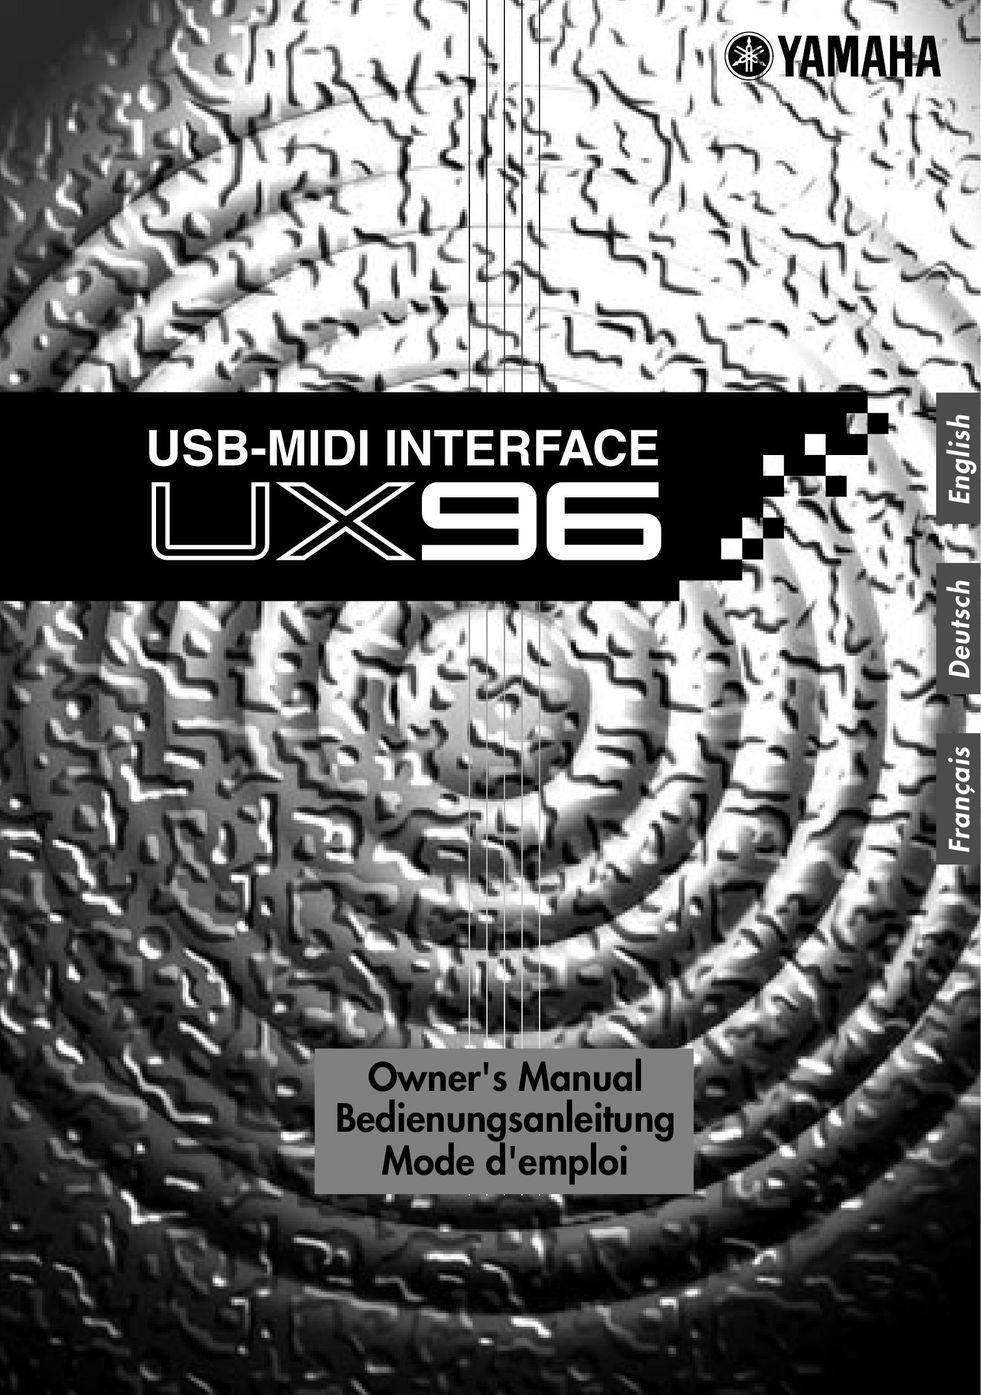 Yamaha UX96 Home Theater Server User Manual